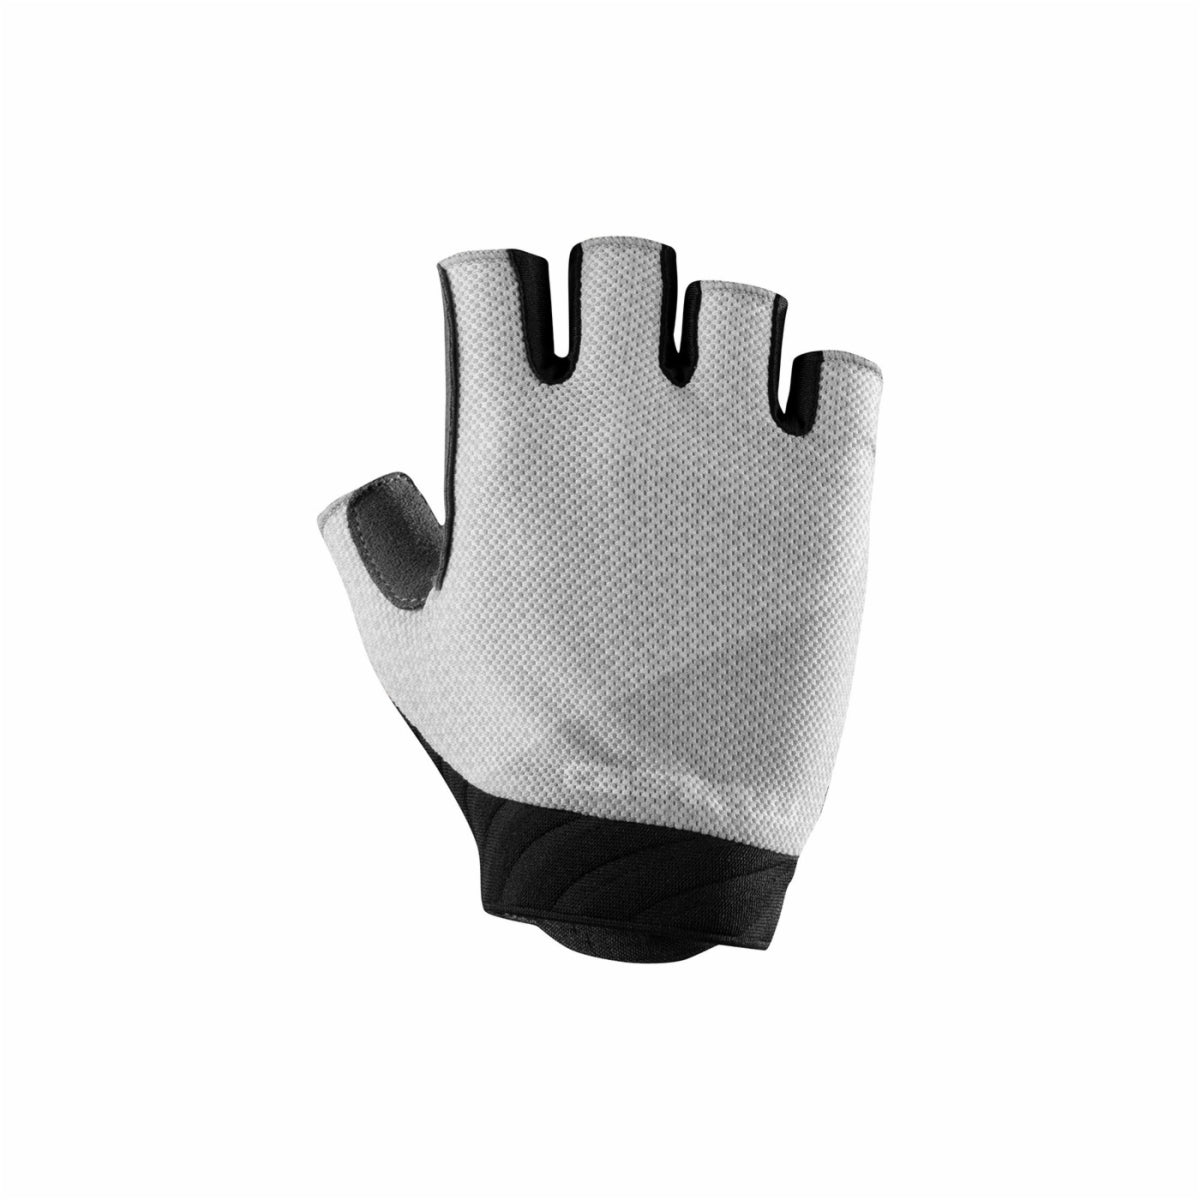 Castelli Women's Roubaix 2 Gel Glove